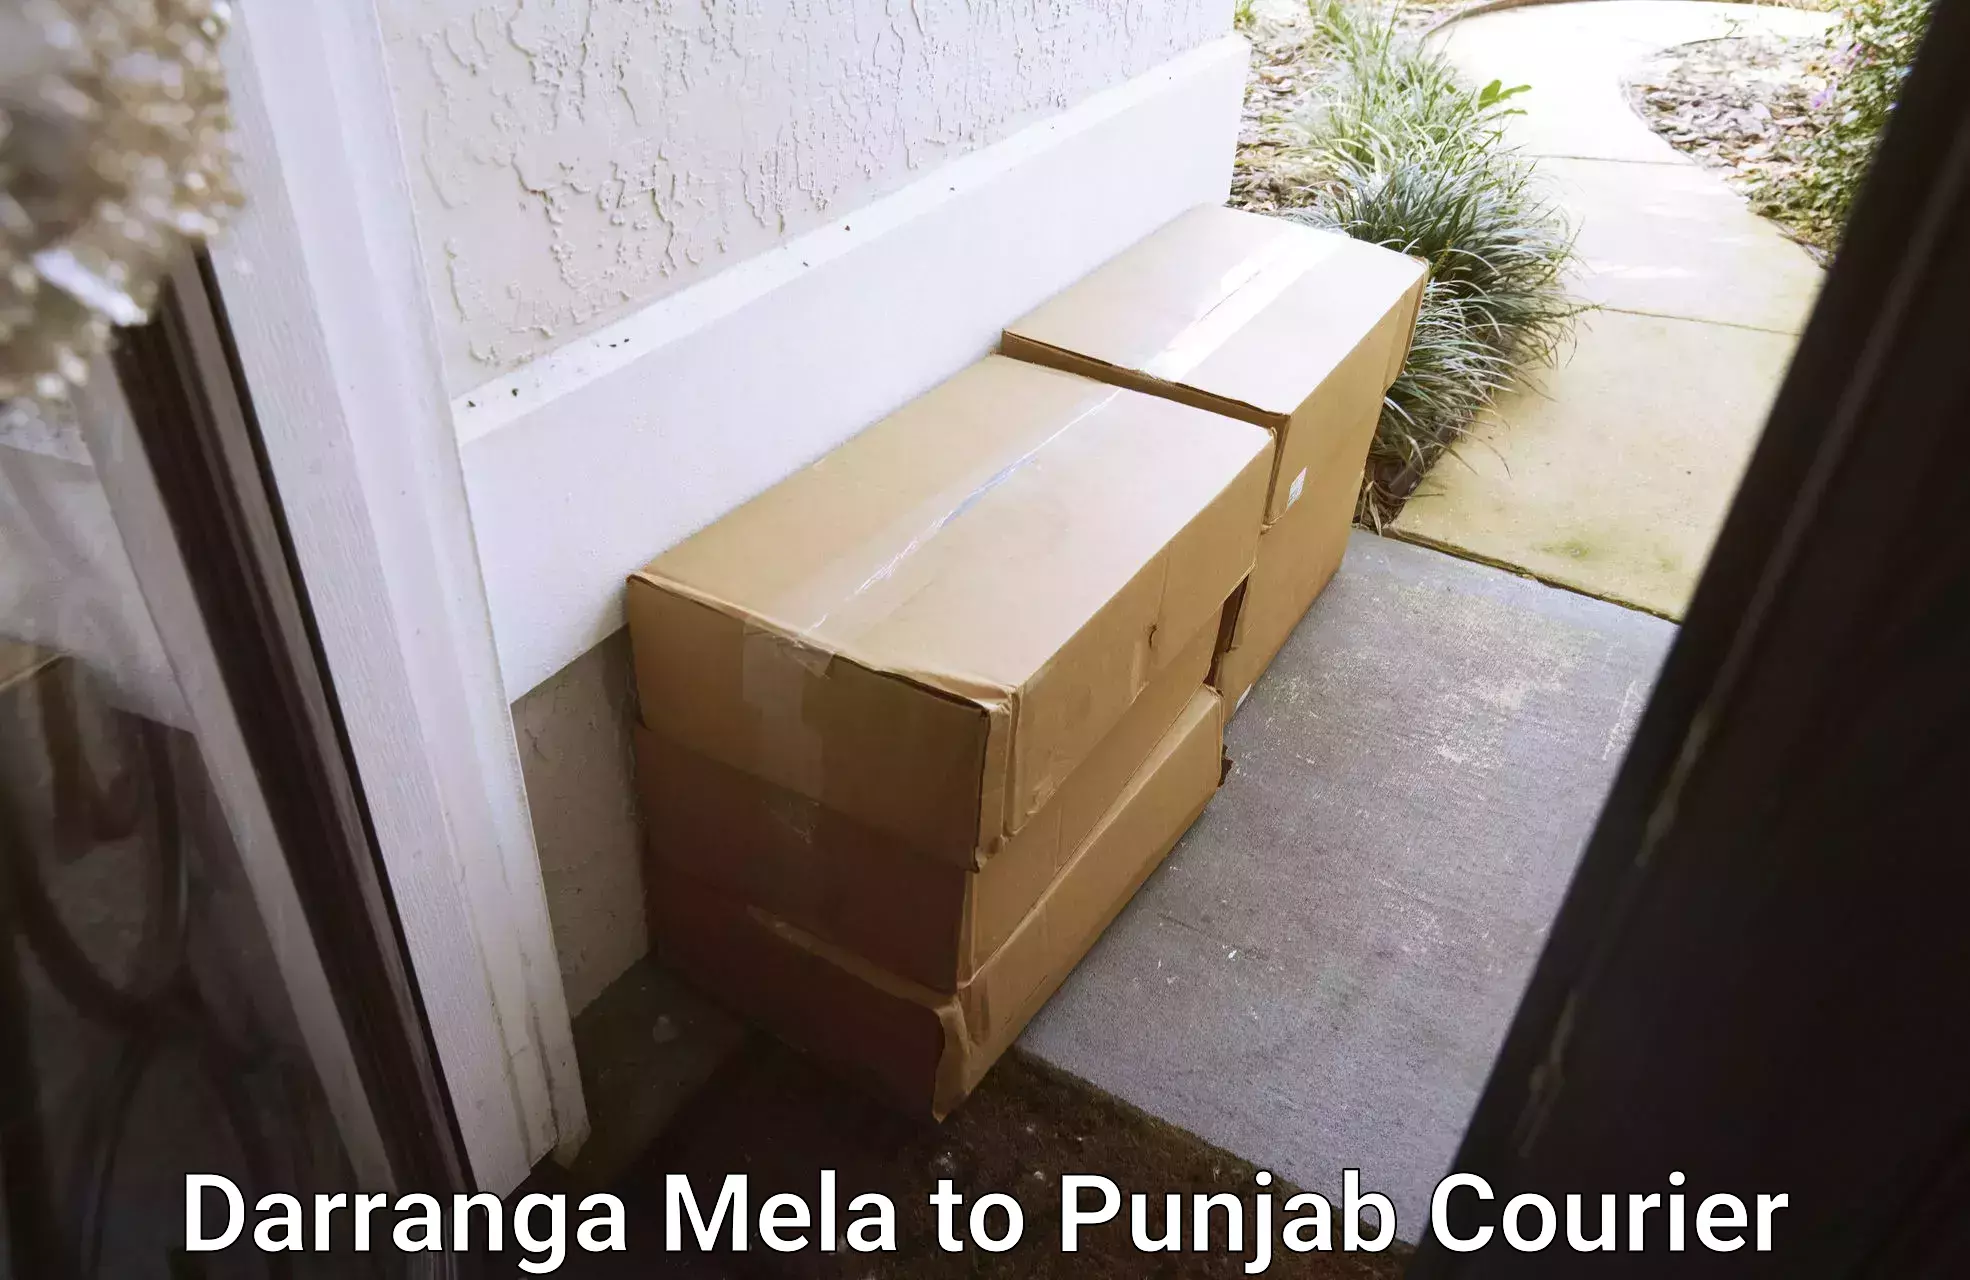 Overnight delivery services Darranga Mela to Faridkot